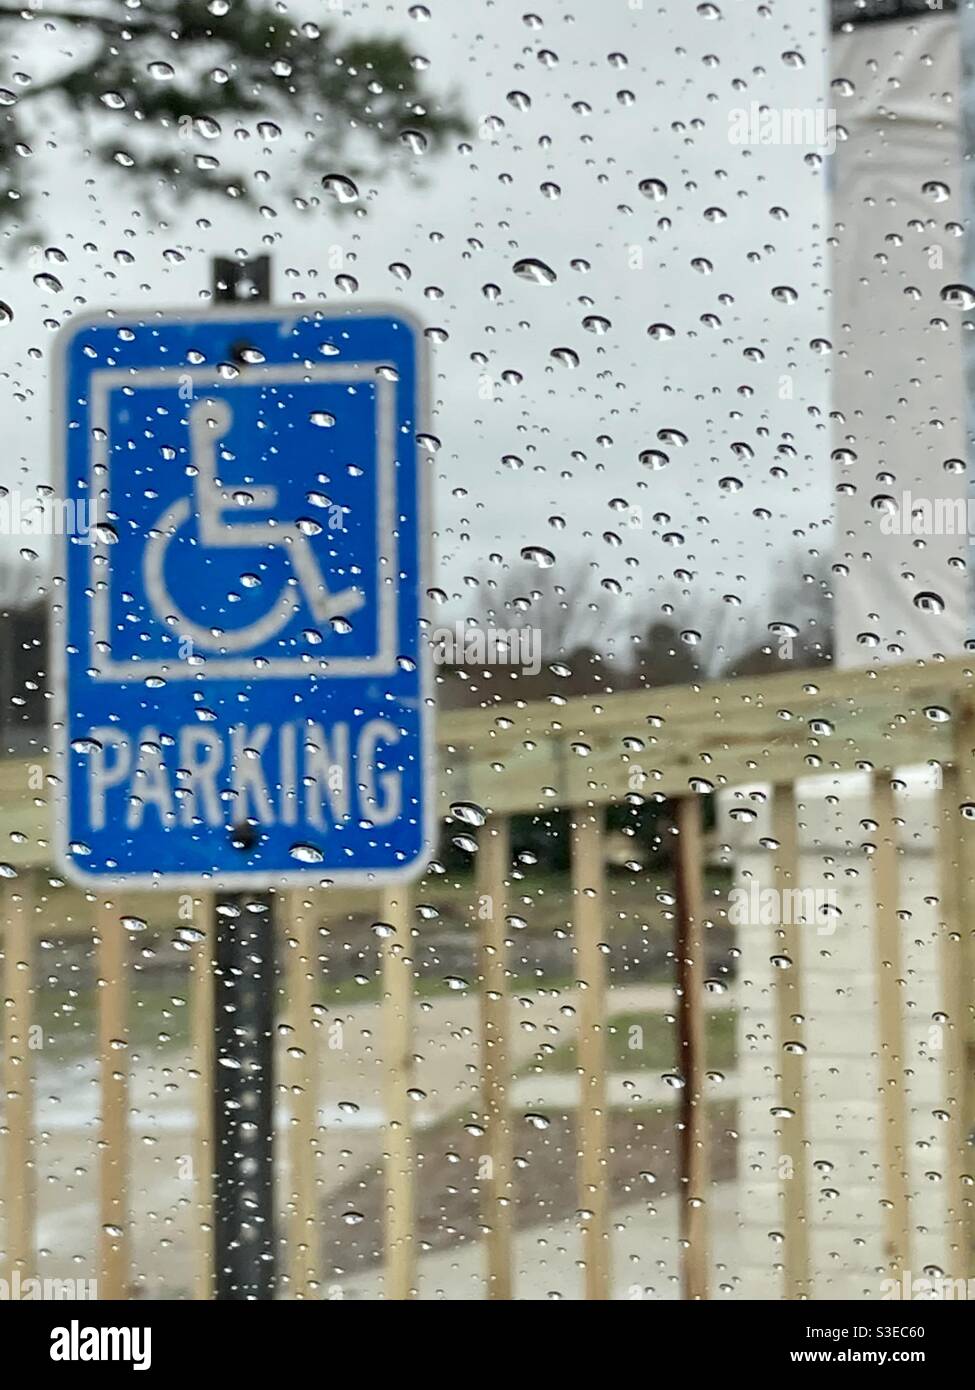 Handicap parking sign in rain Stock Photo